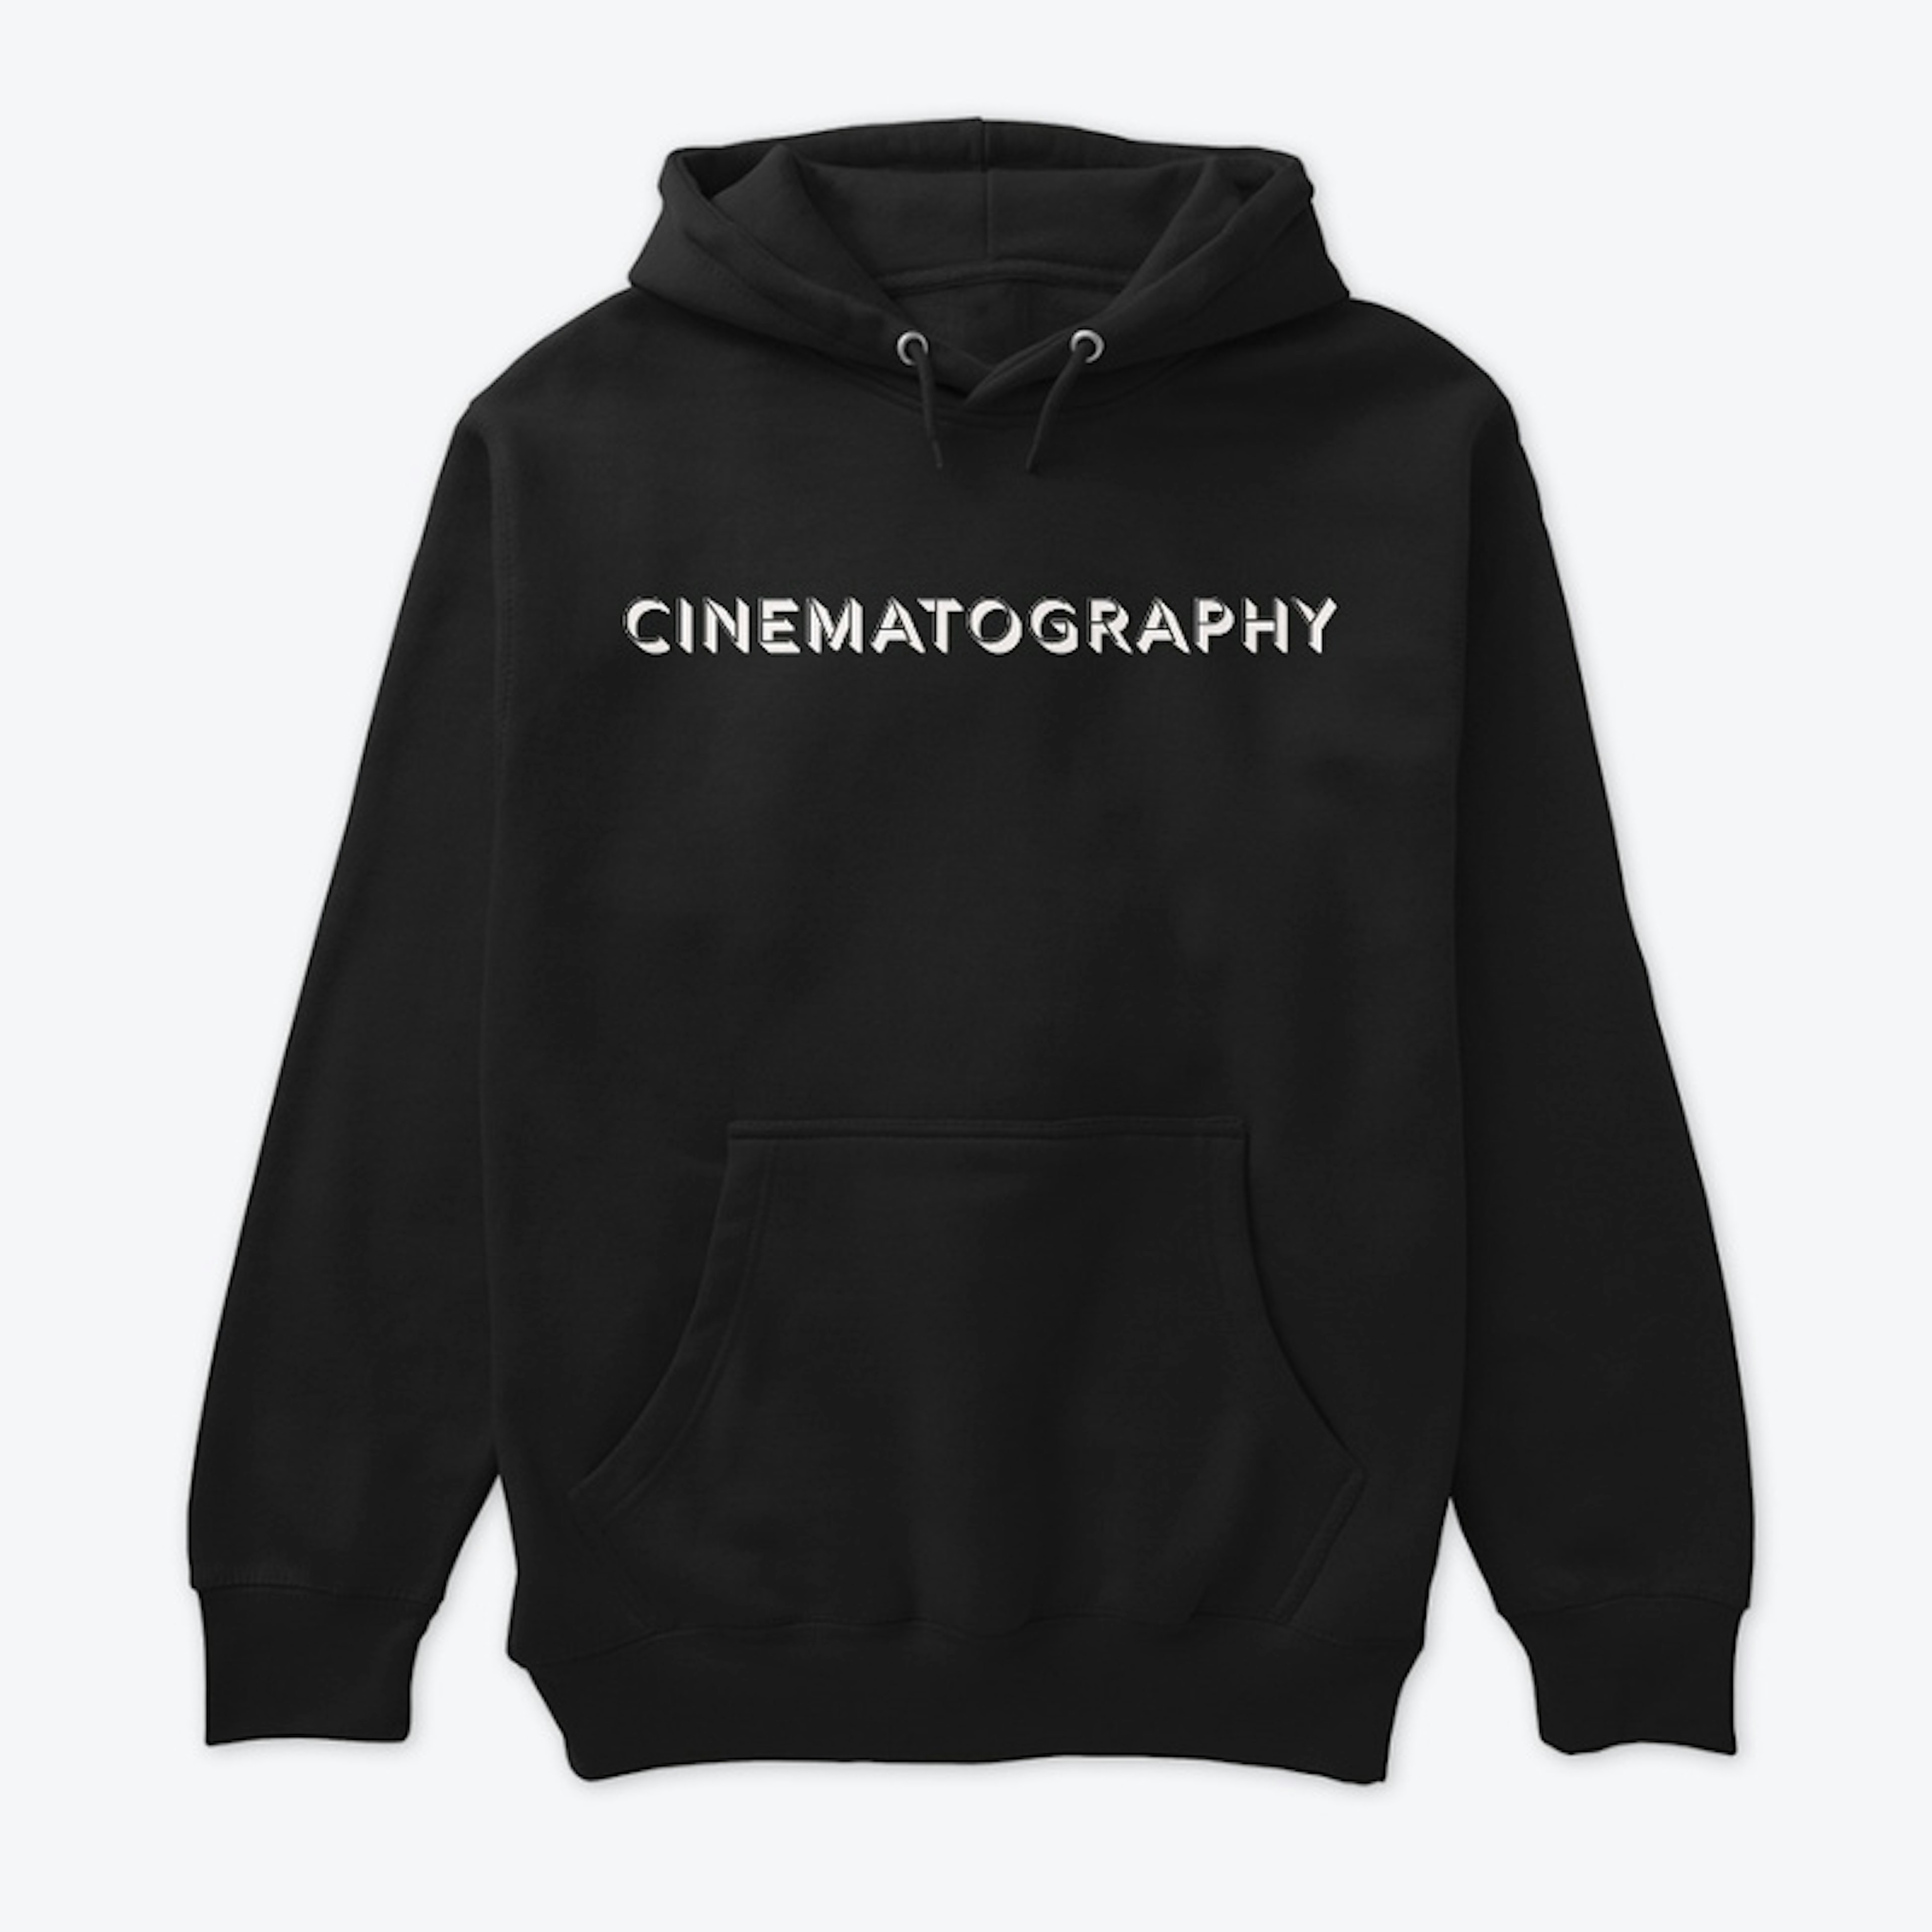 CINEMATOGRAPHY